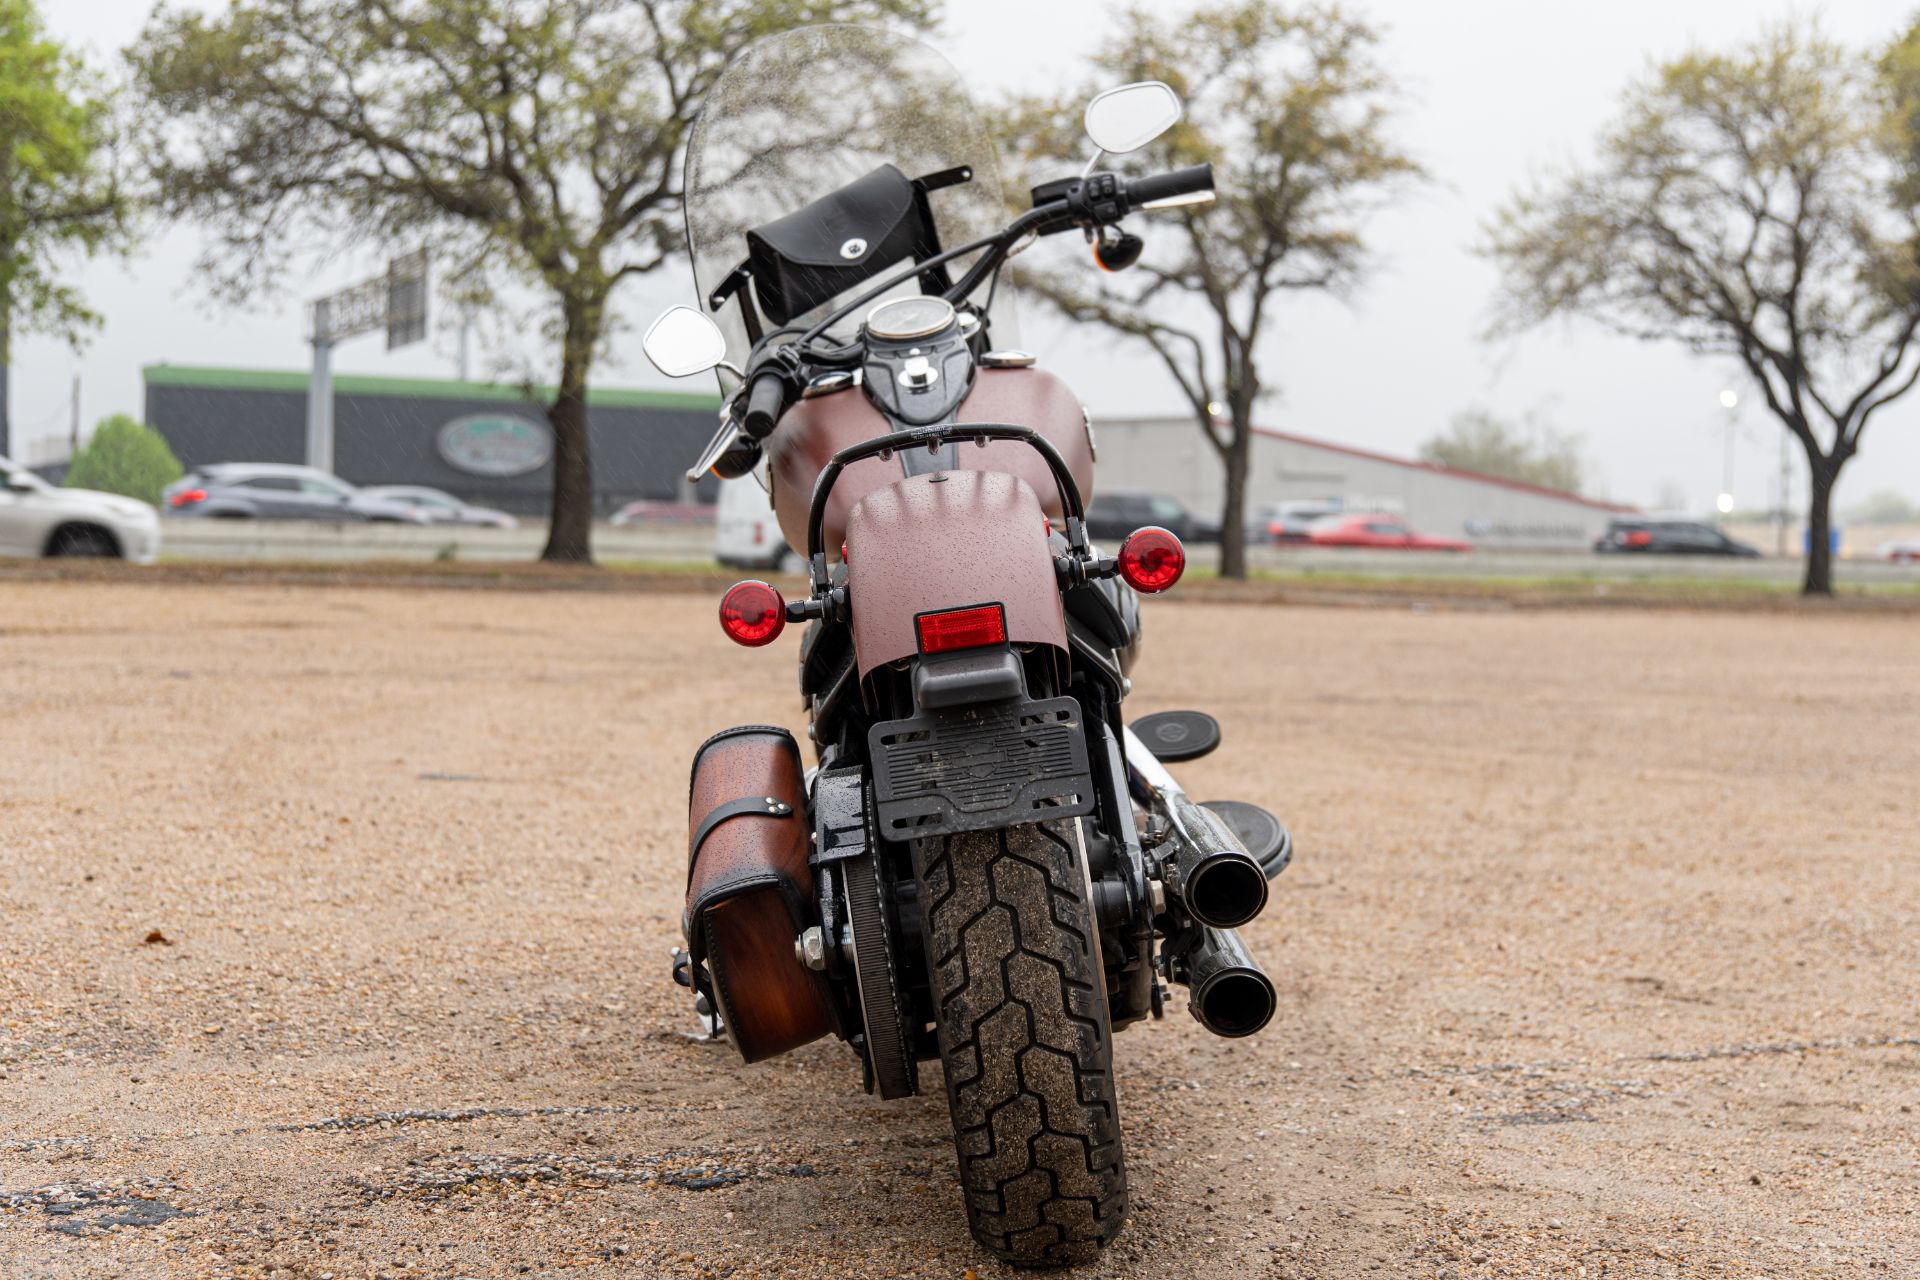 2017 Harley-Davidson Softail Slim® in Houston, Texas - Photo 4